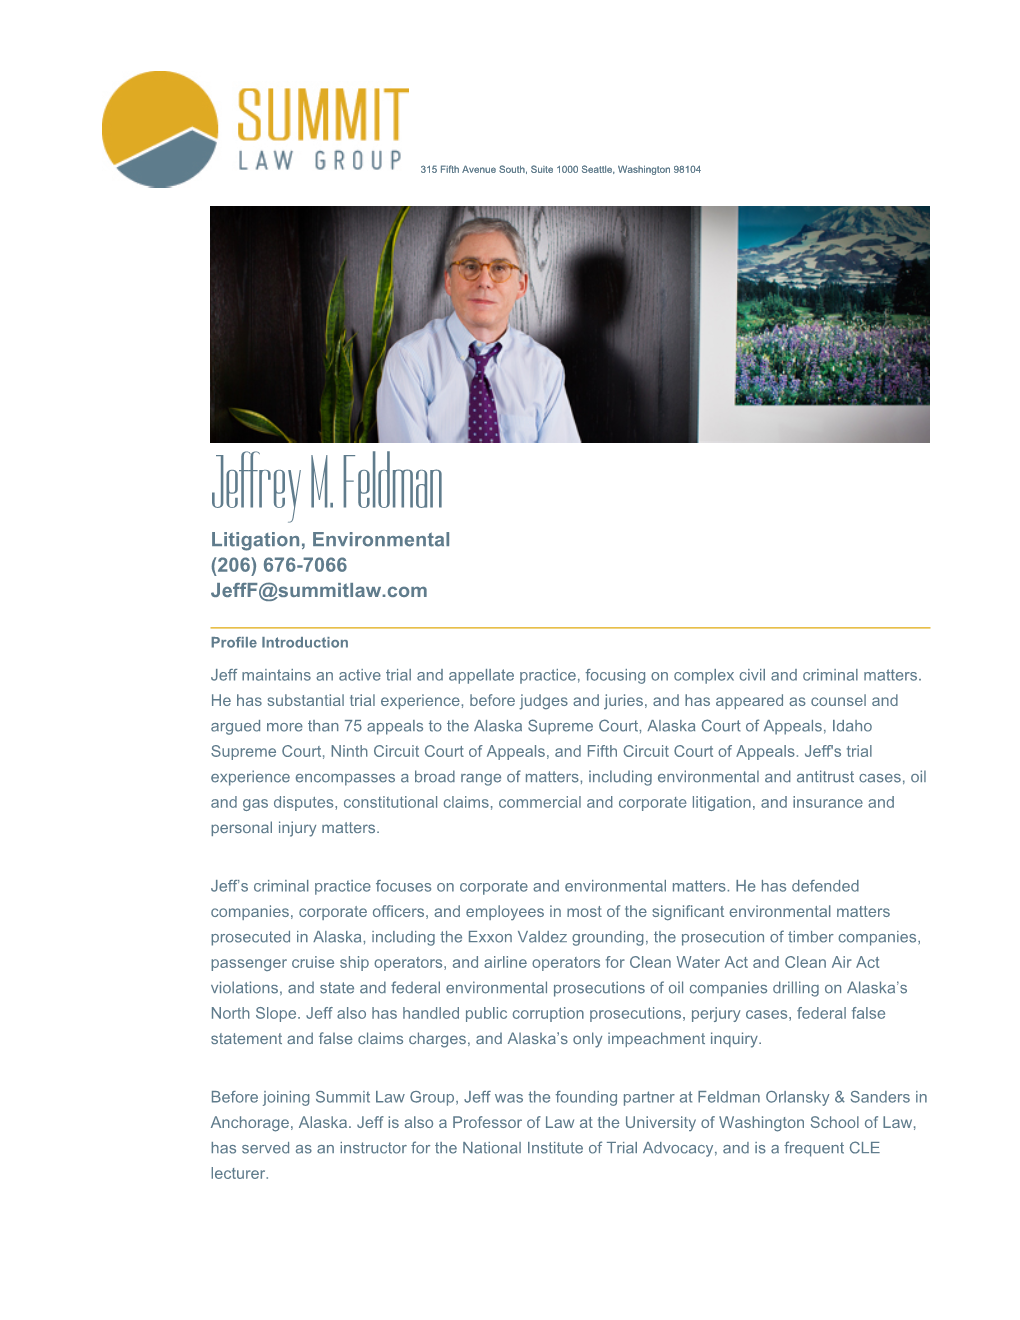 Jeffrey M. Feldman Litigation, Environmental (206) 676-7066 Jefff@Summitlaw.Com